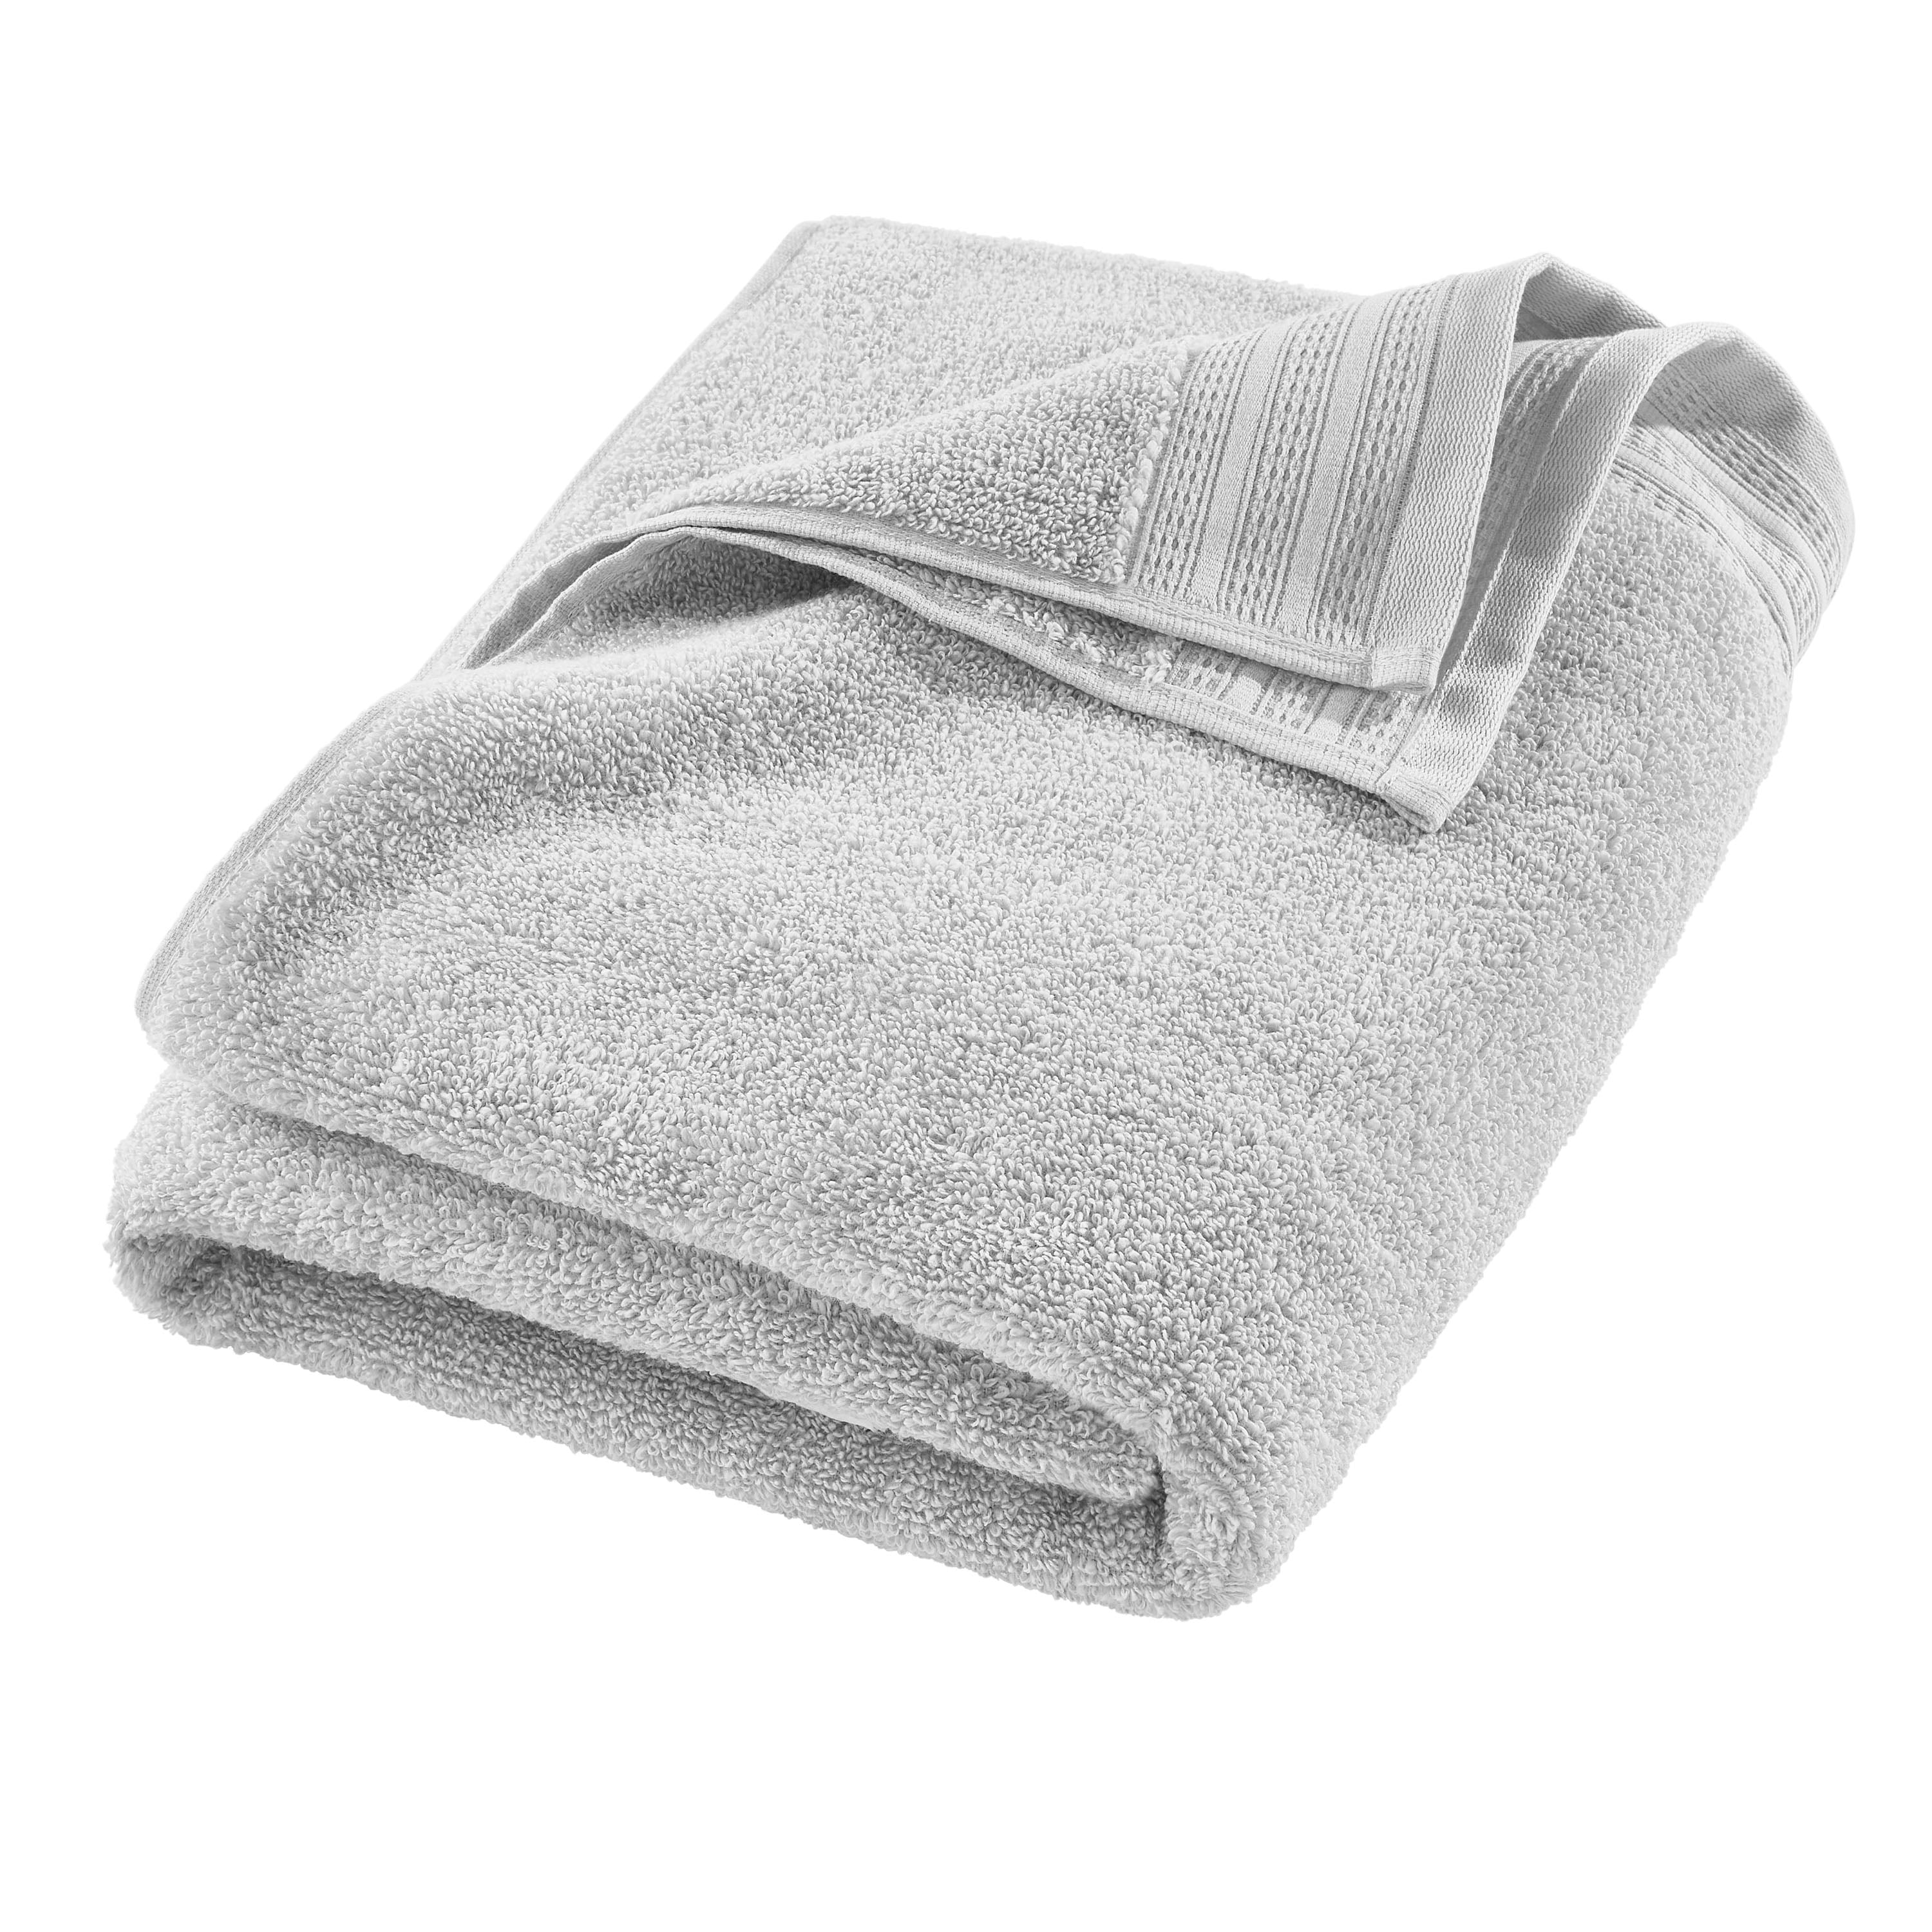   Brand - Pinzon 6 Piece Blended Egyptian Cotton Bath Towel  Set, White, 56 L x 30 W : Home & Kitchen